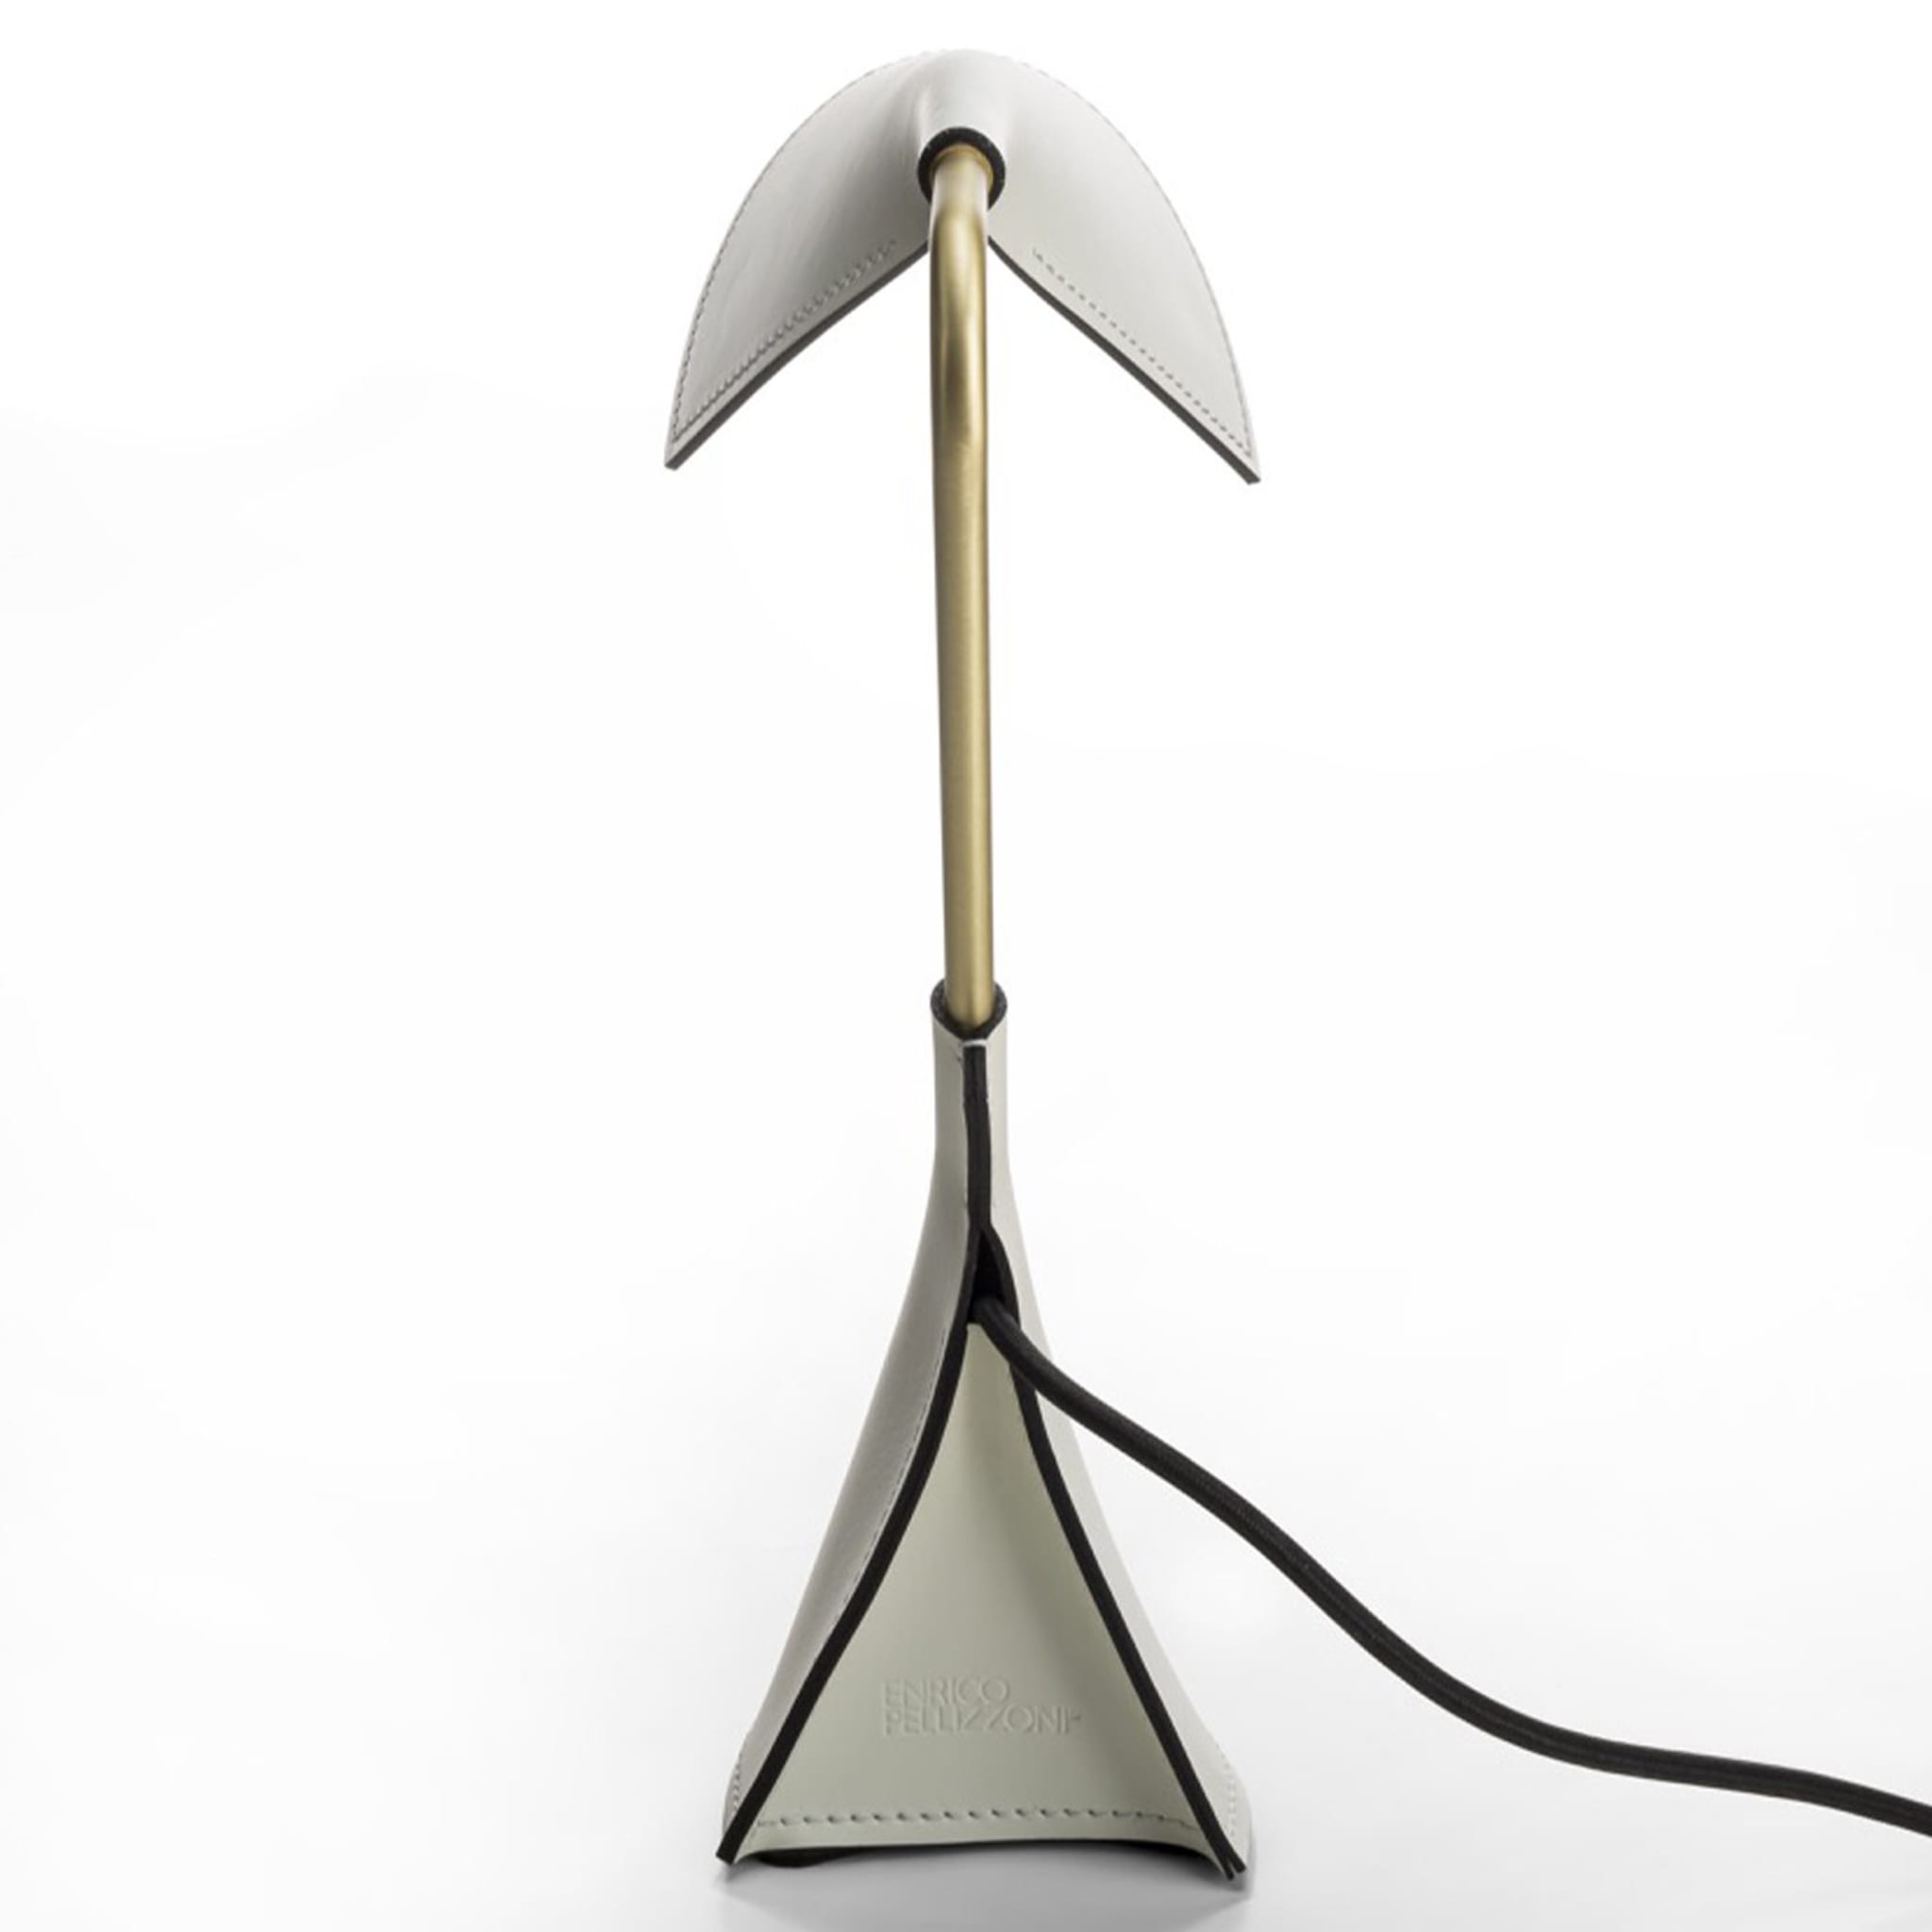 Duffy White Desk Lamp #1 - Alternative view 5